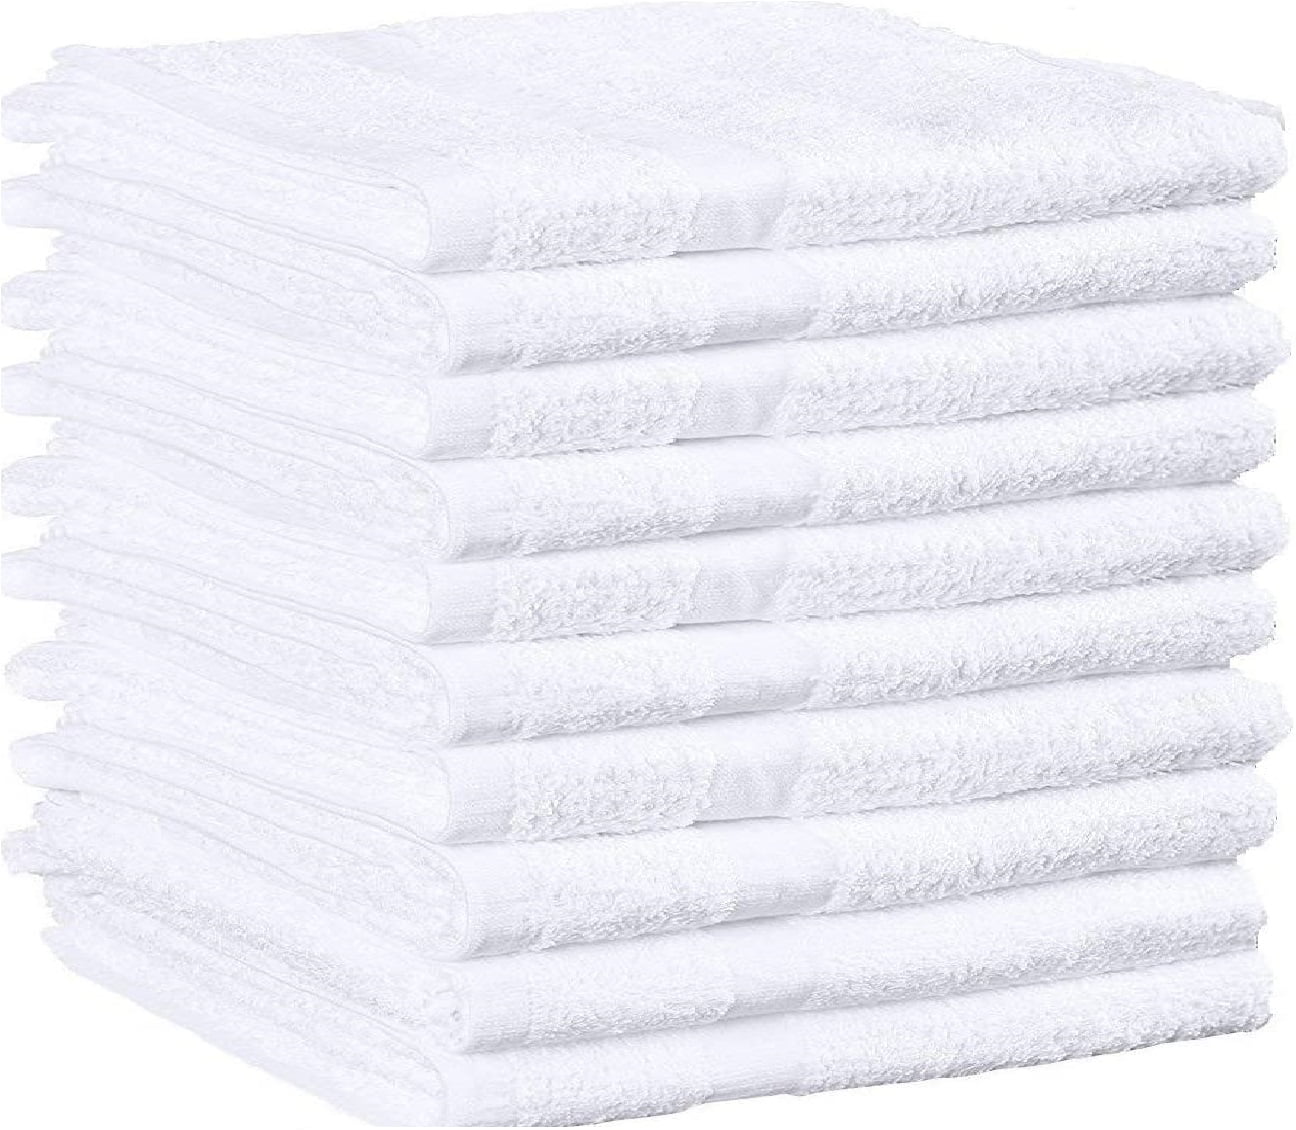 60 new 100% cotton commercial bath towels utility gym hotel motel 22x44 deal! 